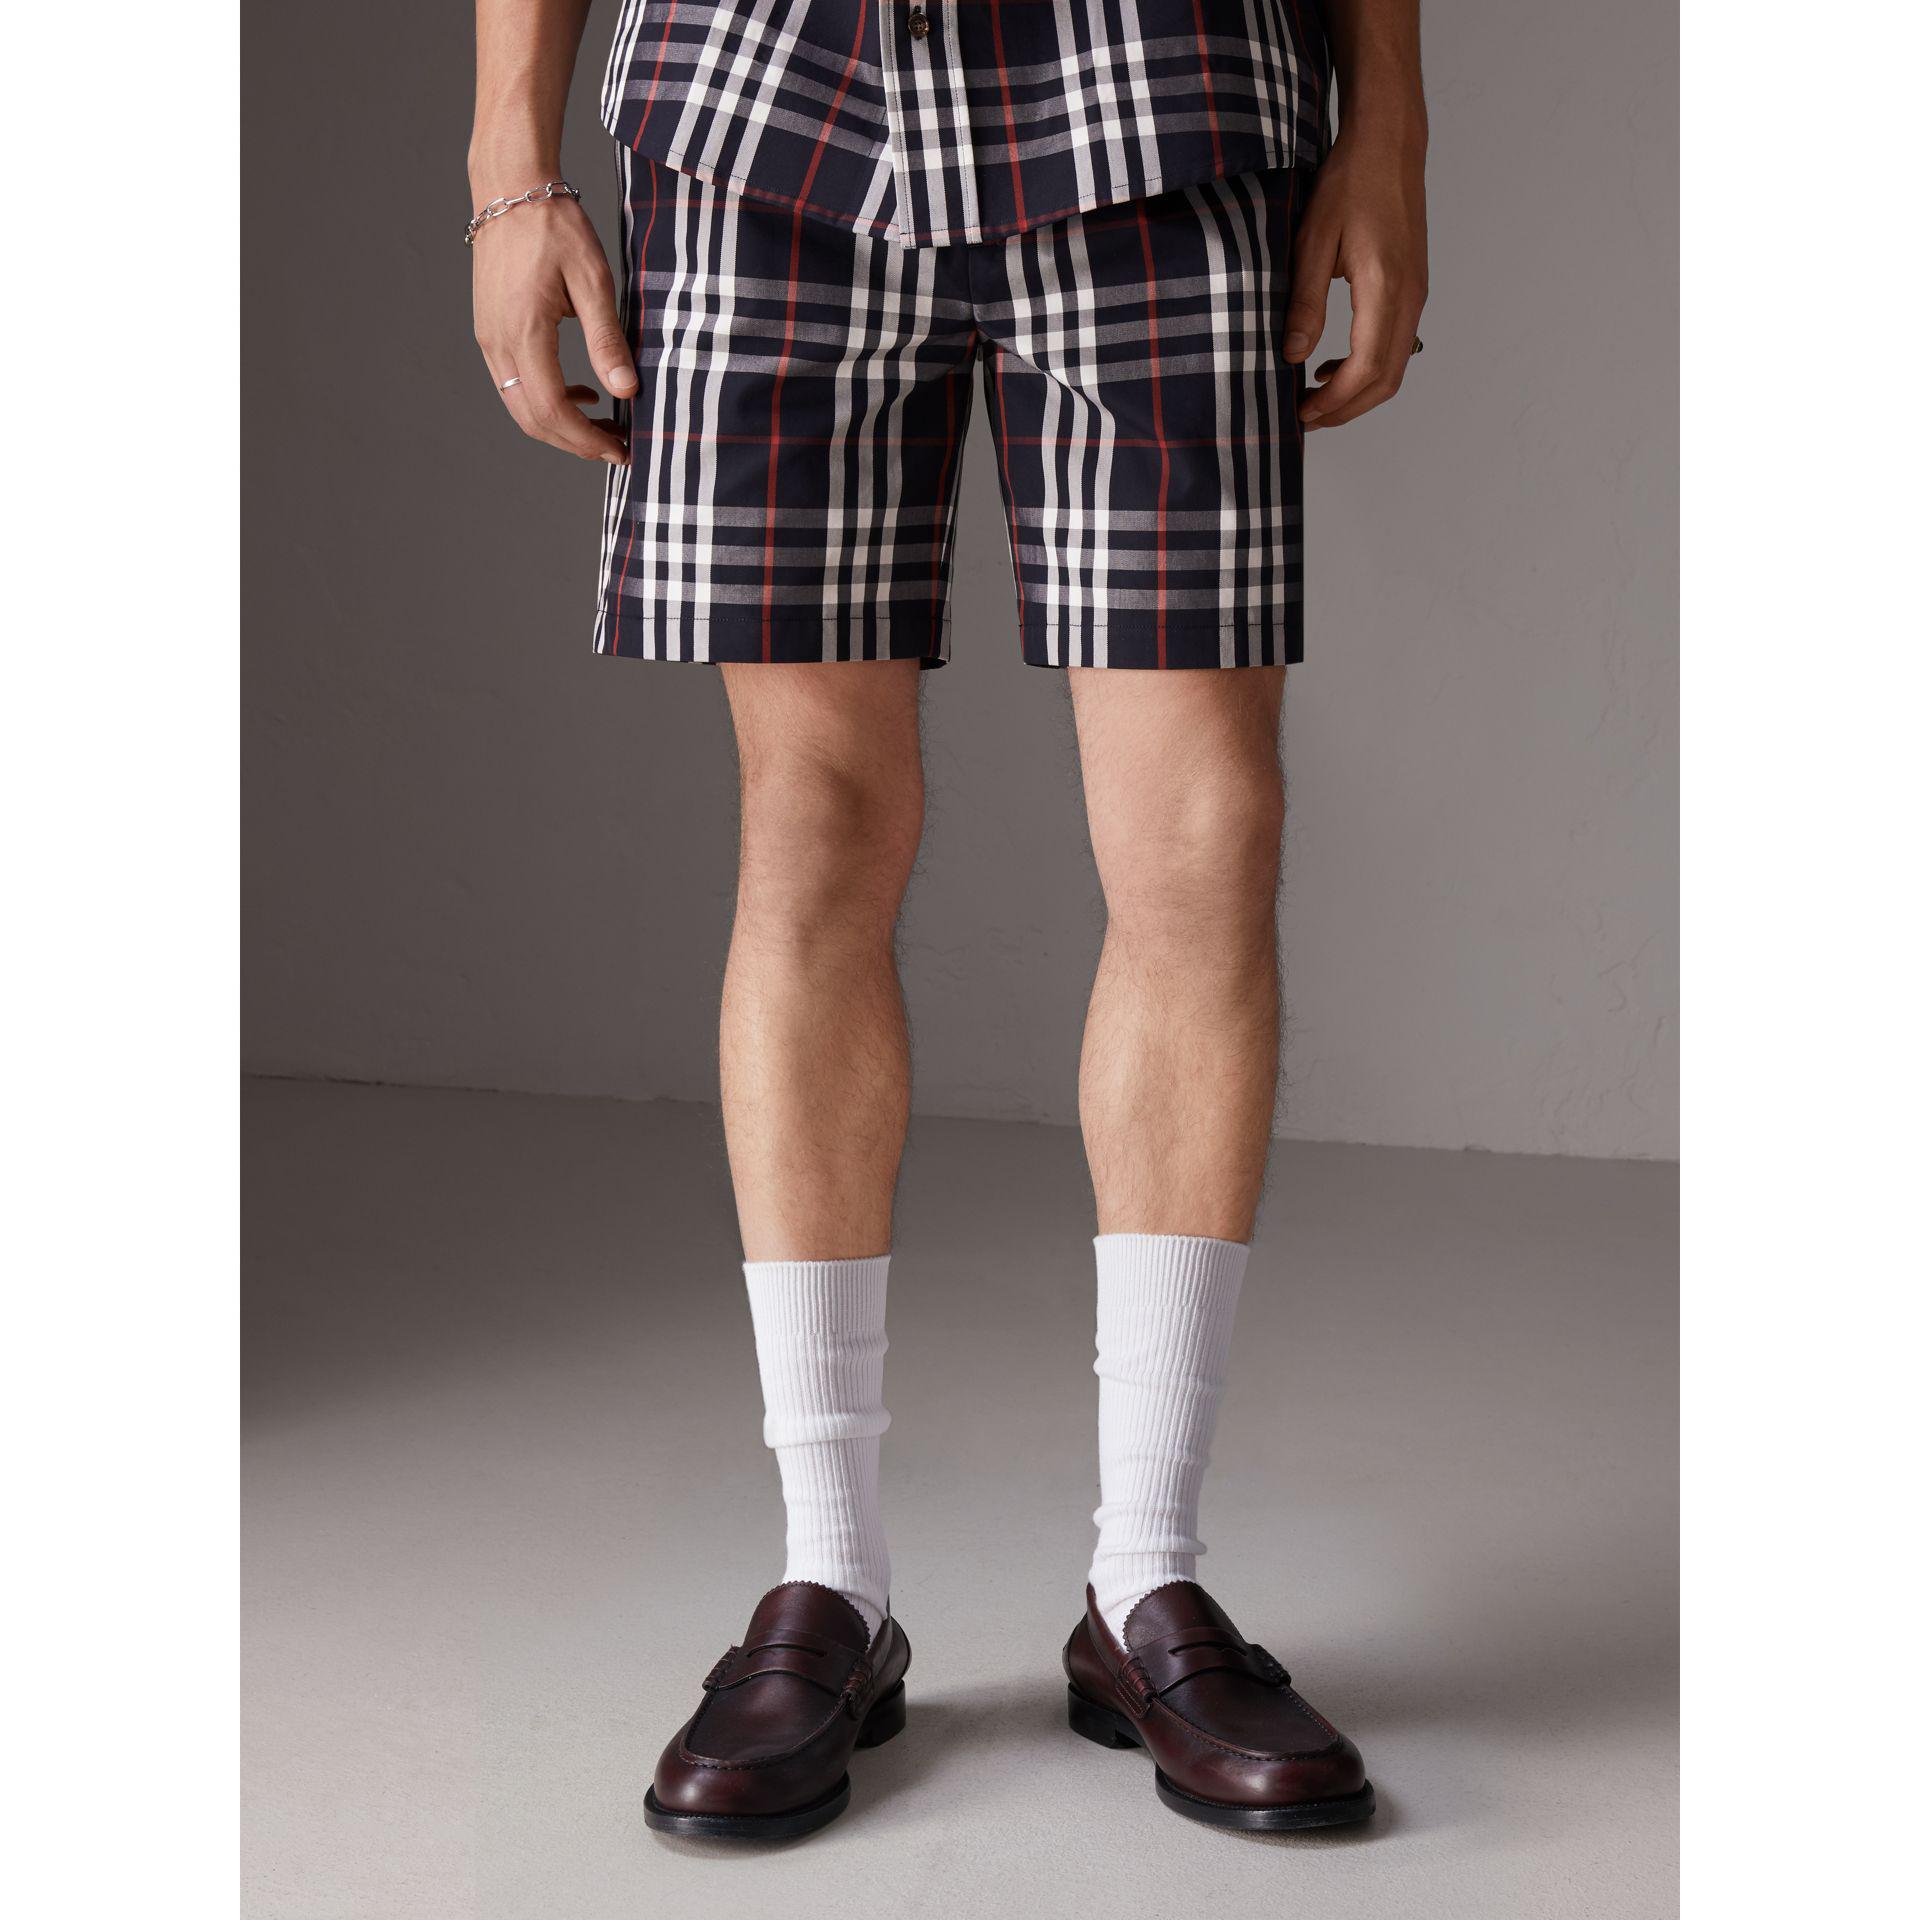 burberry gosha shorts